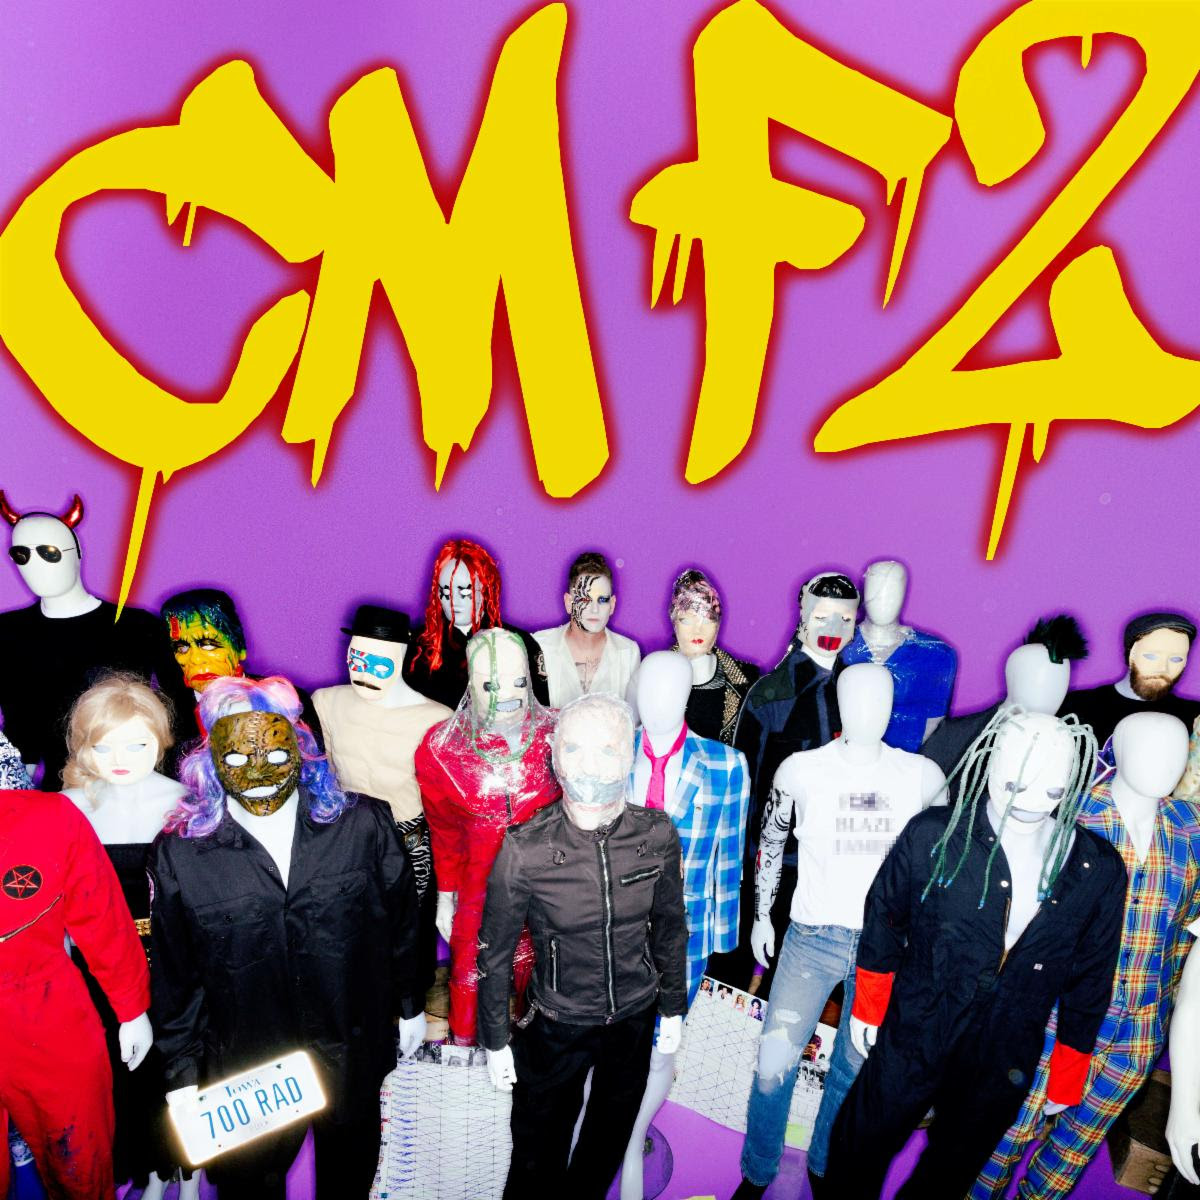 Corey Taylor ‘CMF2’ album artwork